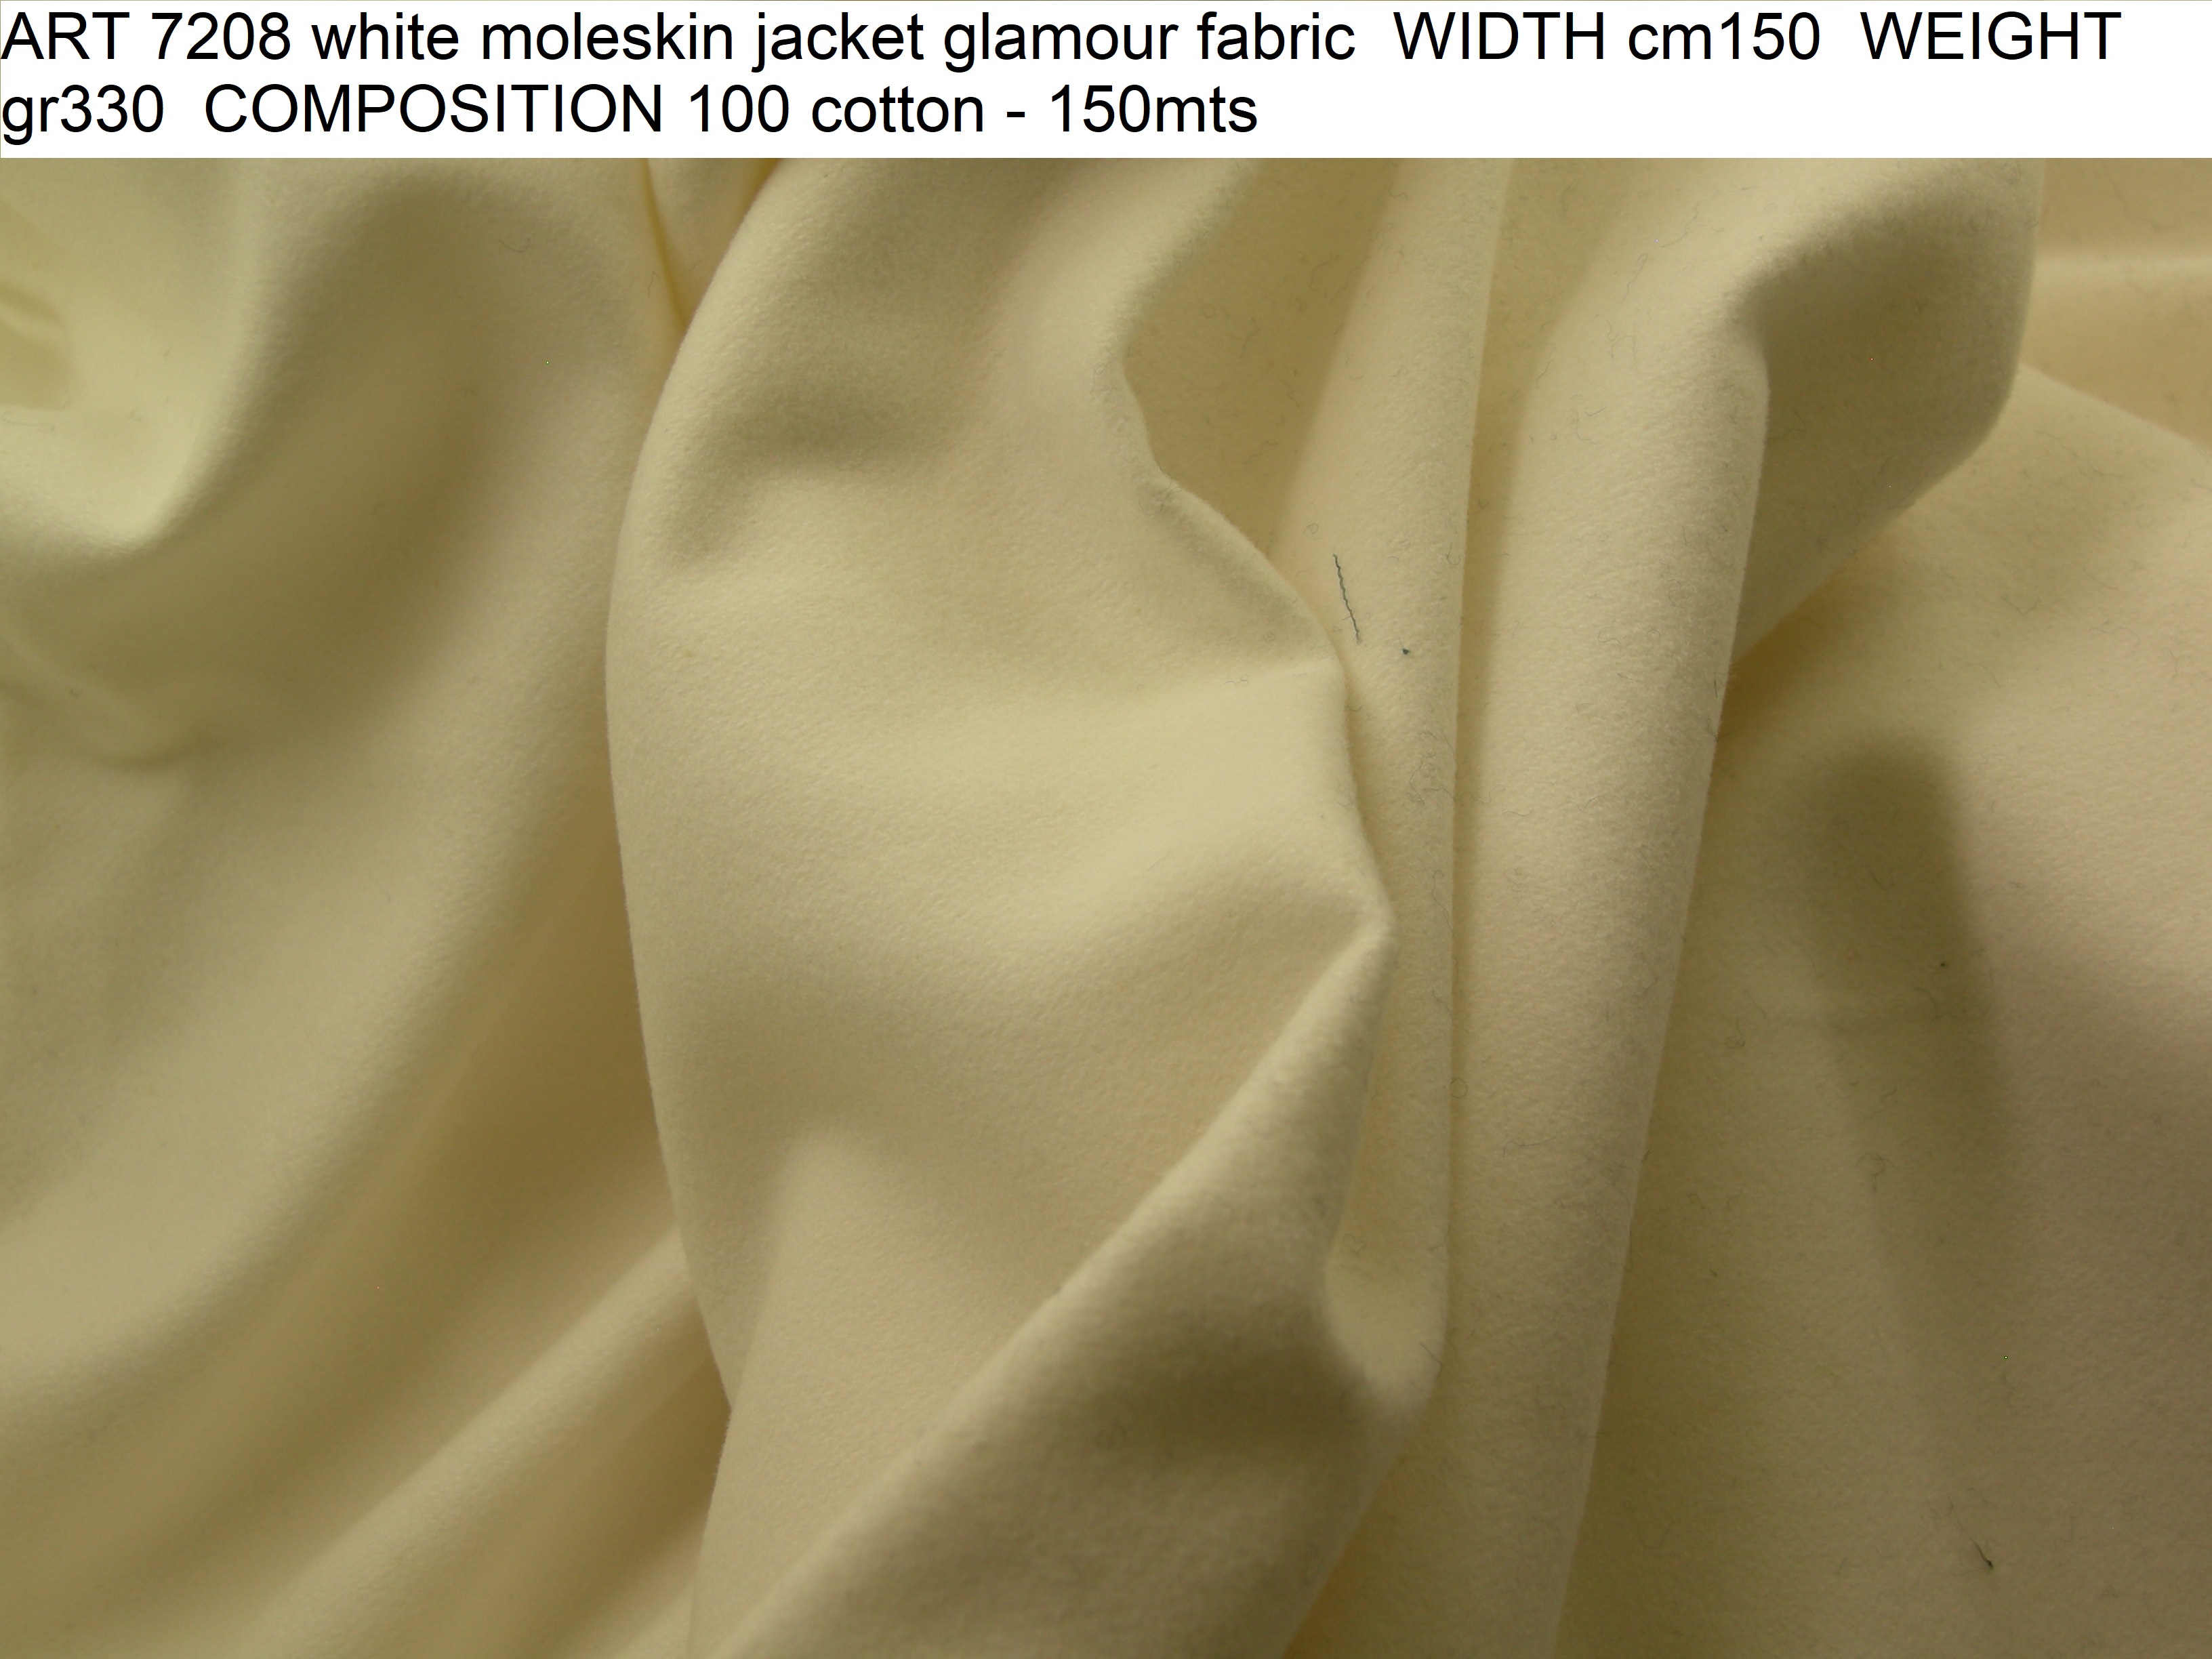 ART 7208 white moleskin jacket glamour fabric WIDTH cm150 WEIGHT gr330 COMPOSITION 100 cotton - 150mts